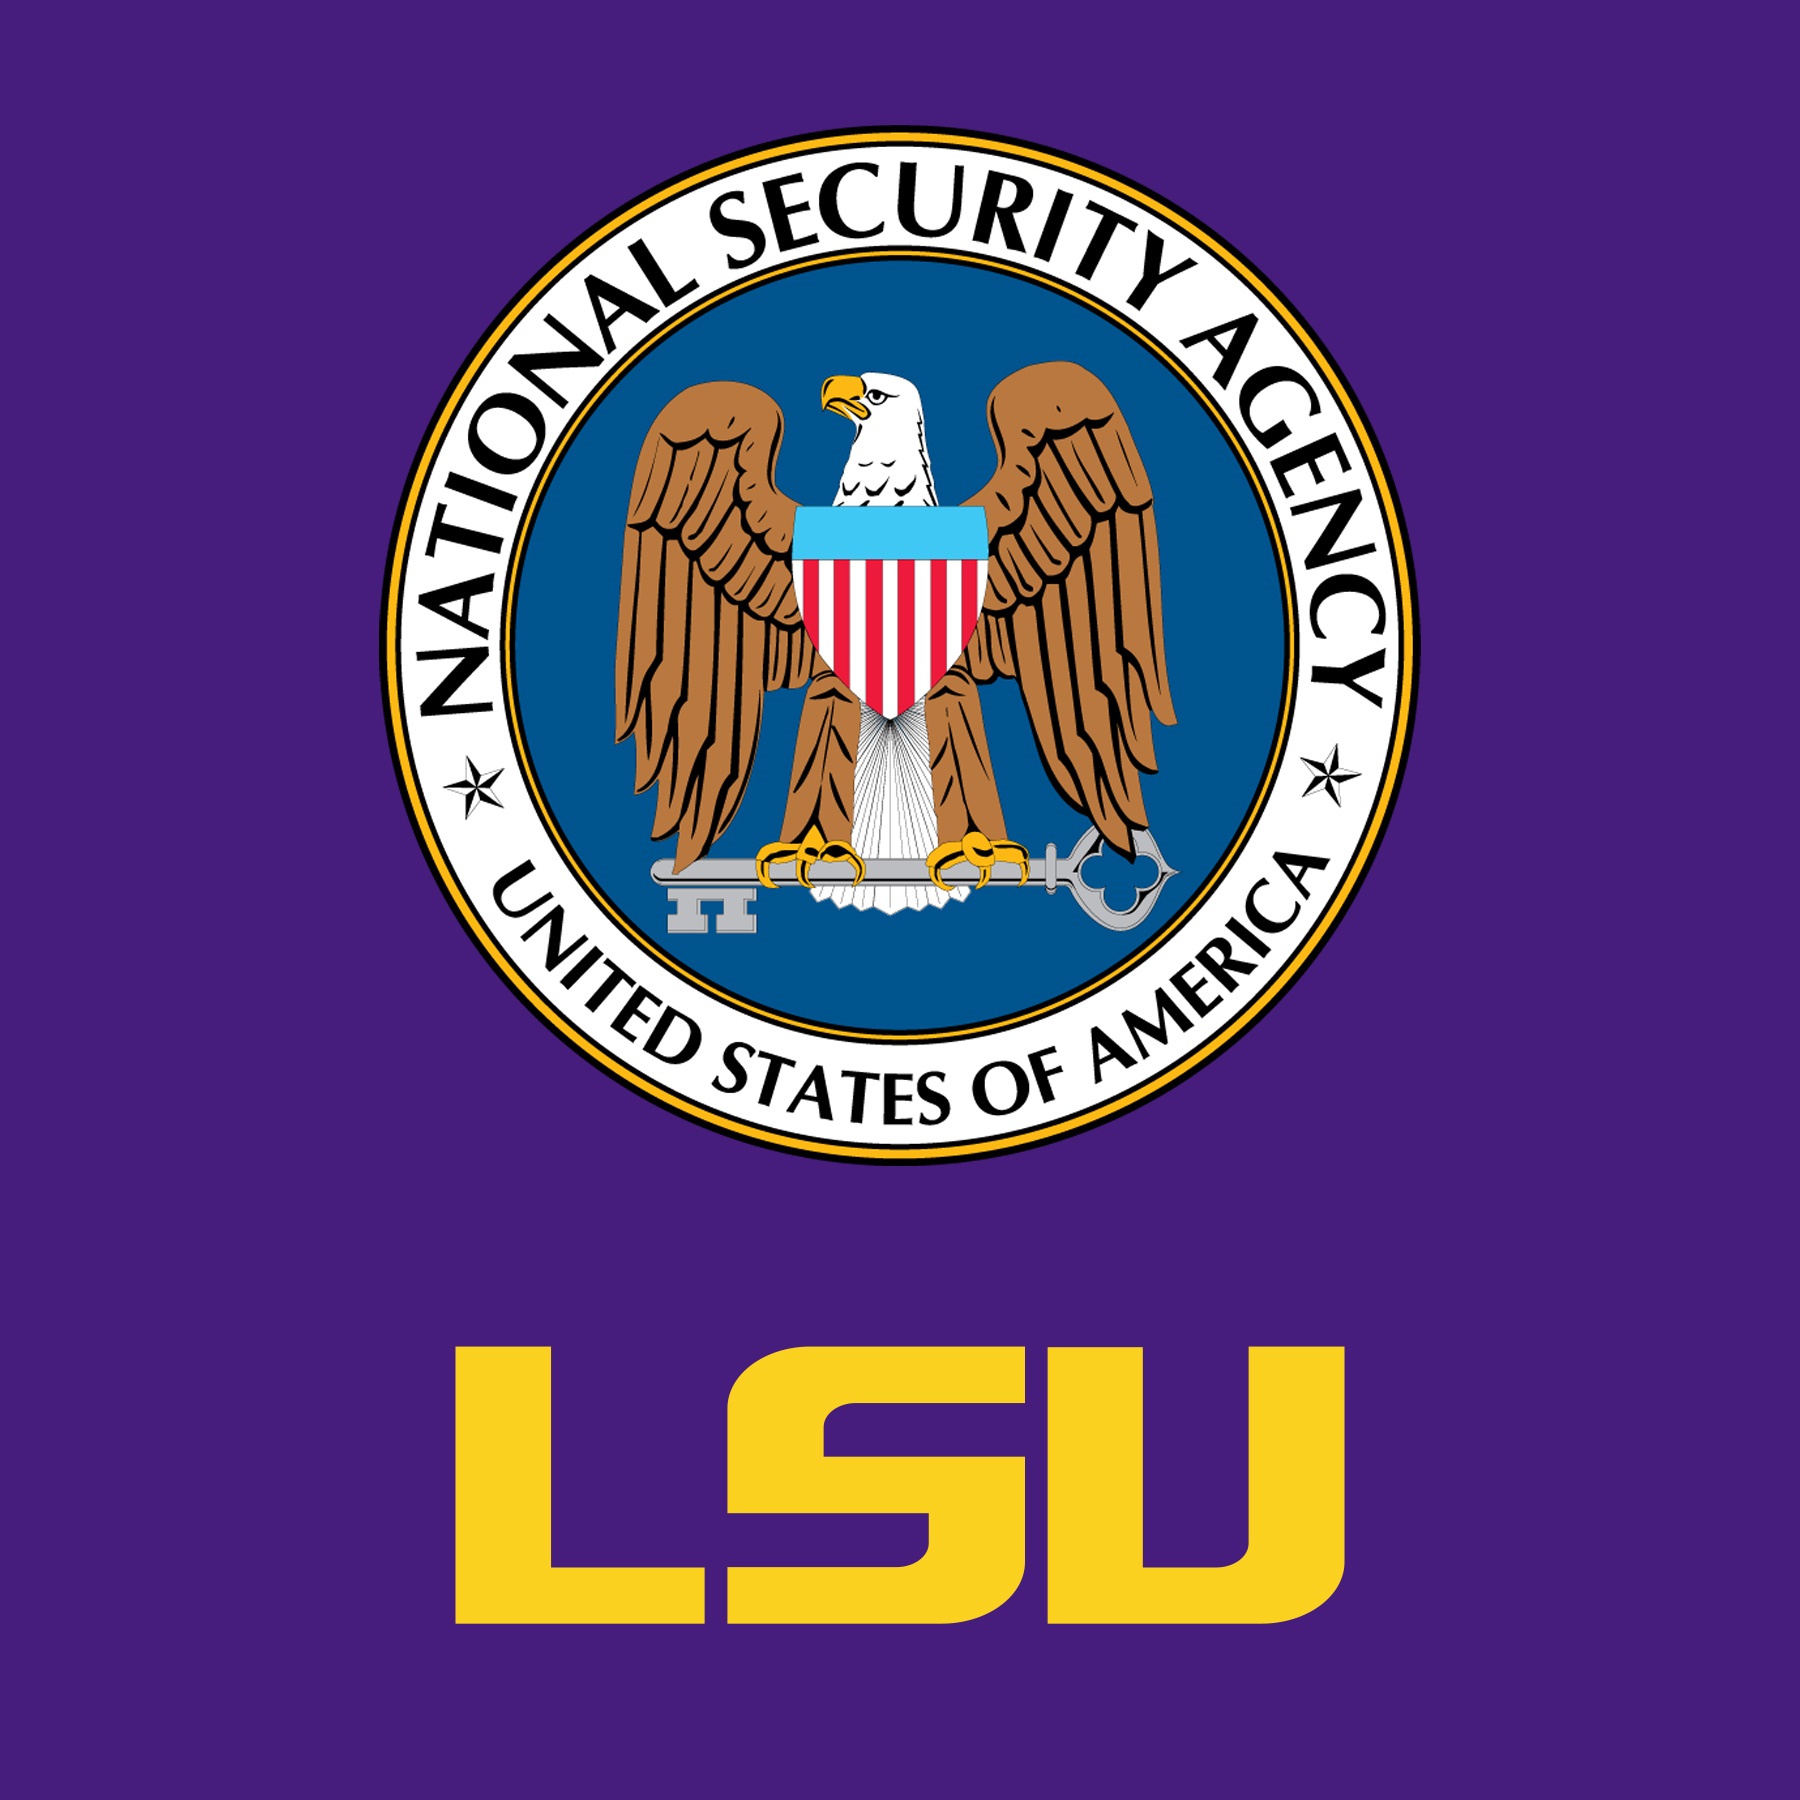 NSA logo and LSU logo